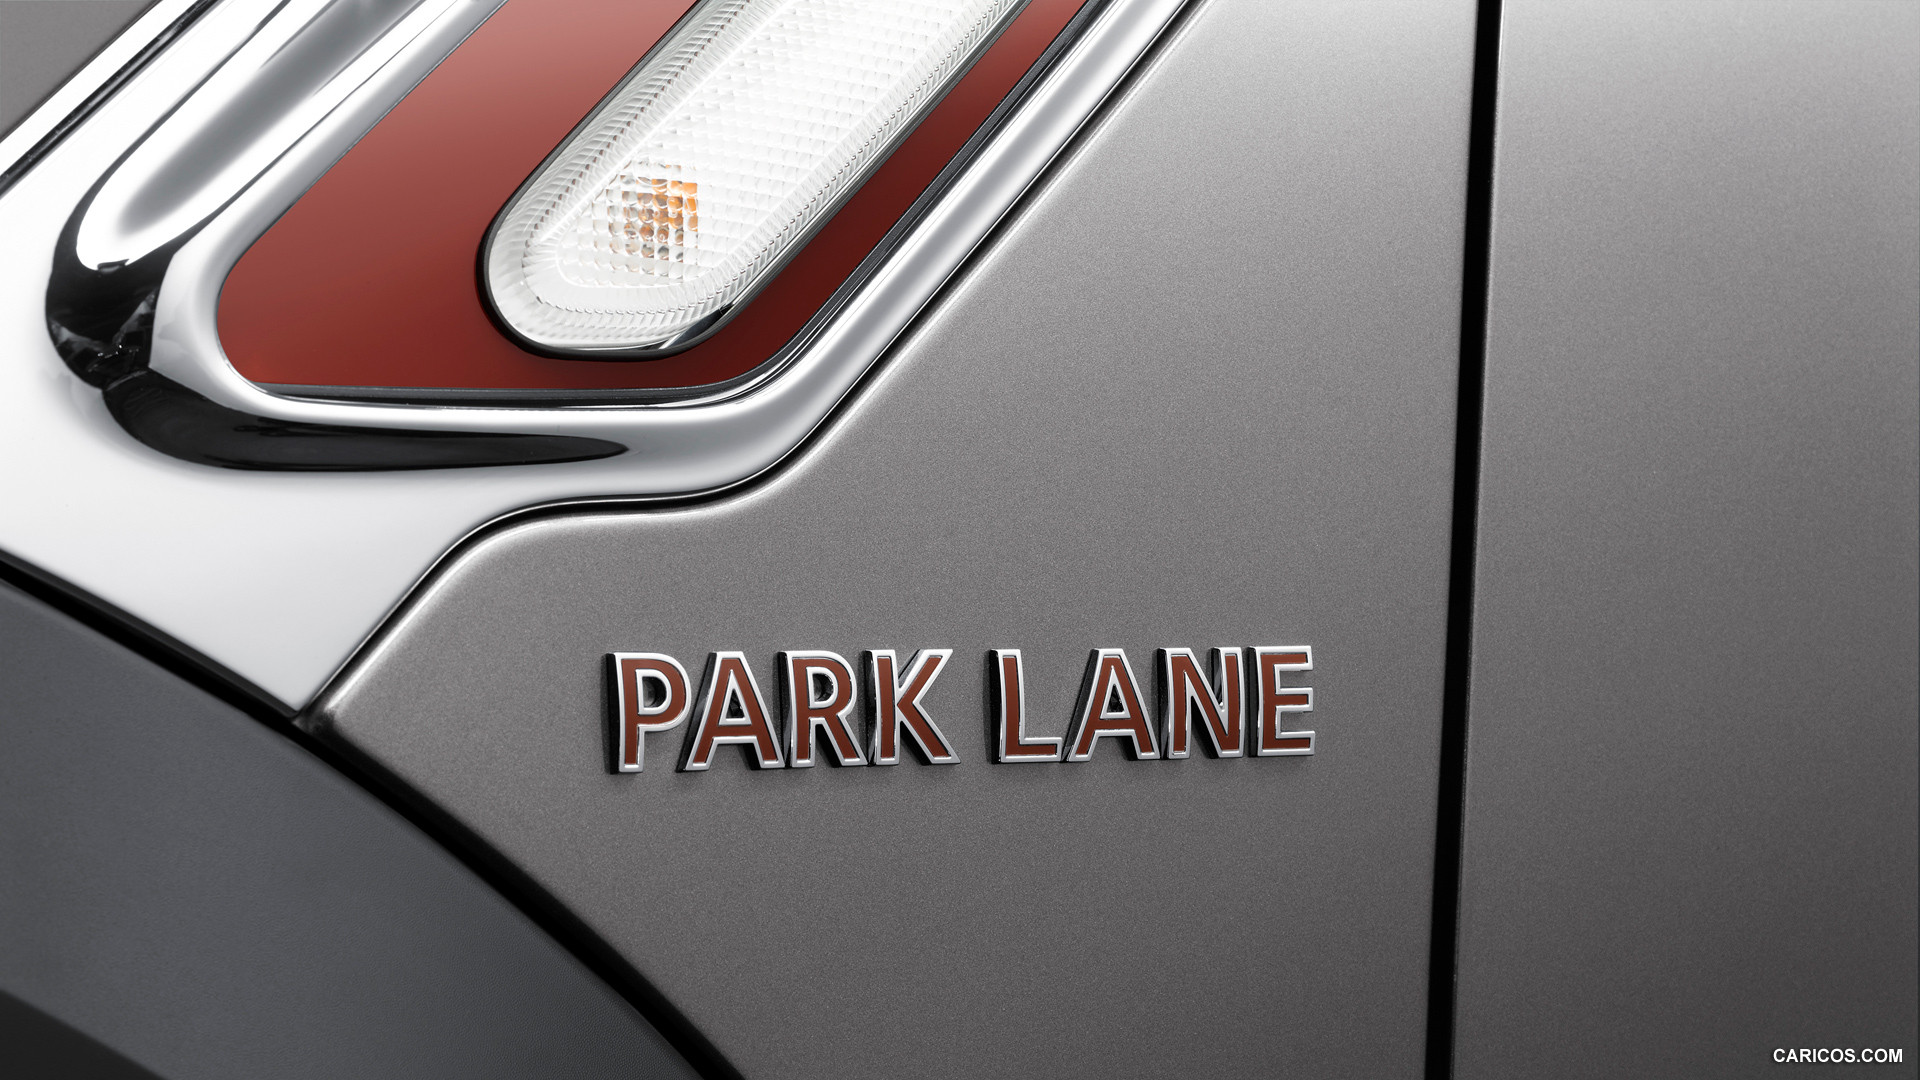 2015 MINI Countryman Park Lane  - Badge, #17 of 26